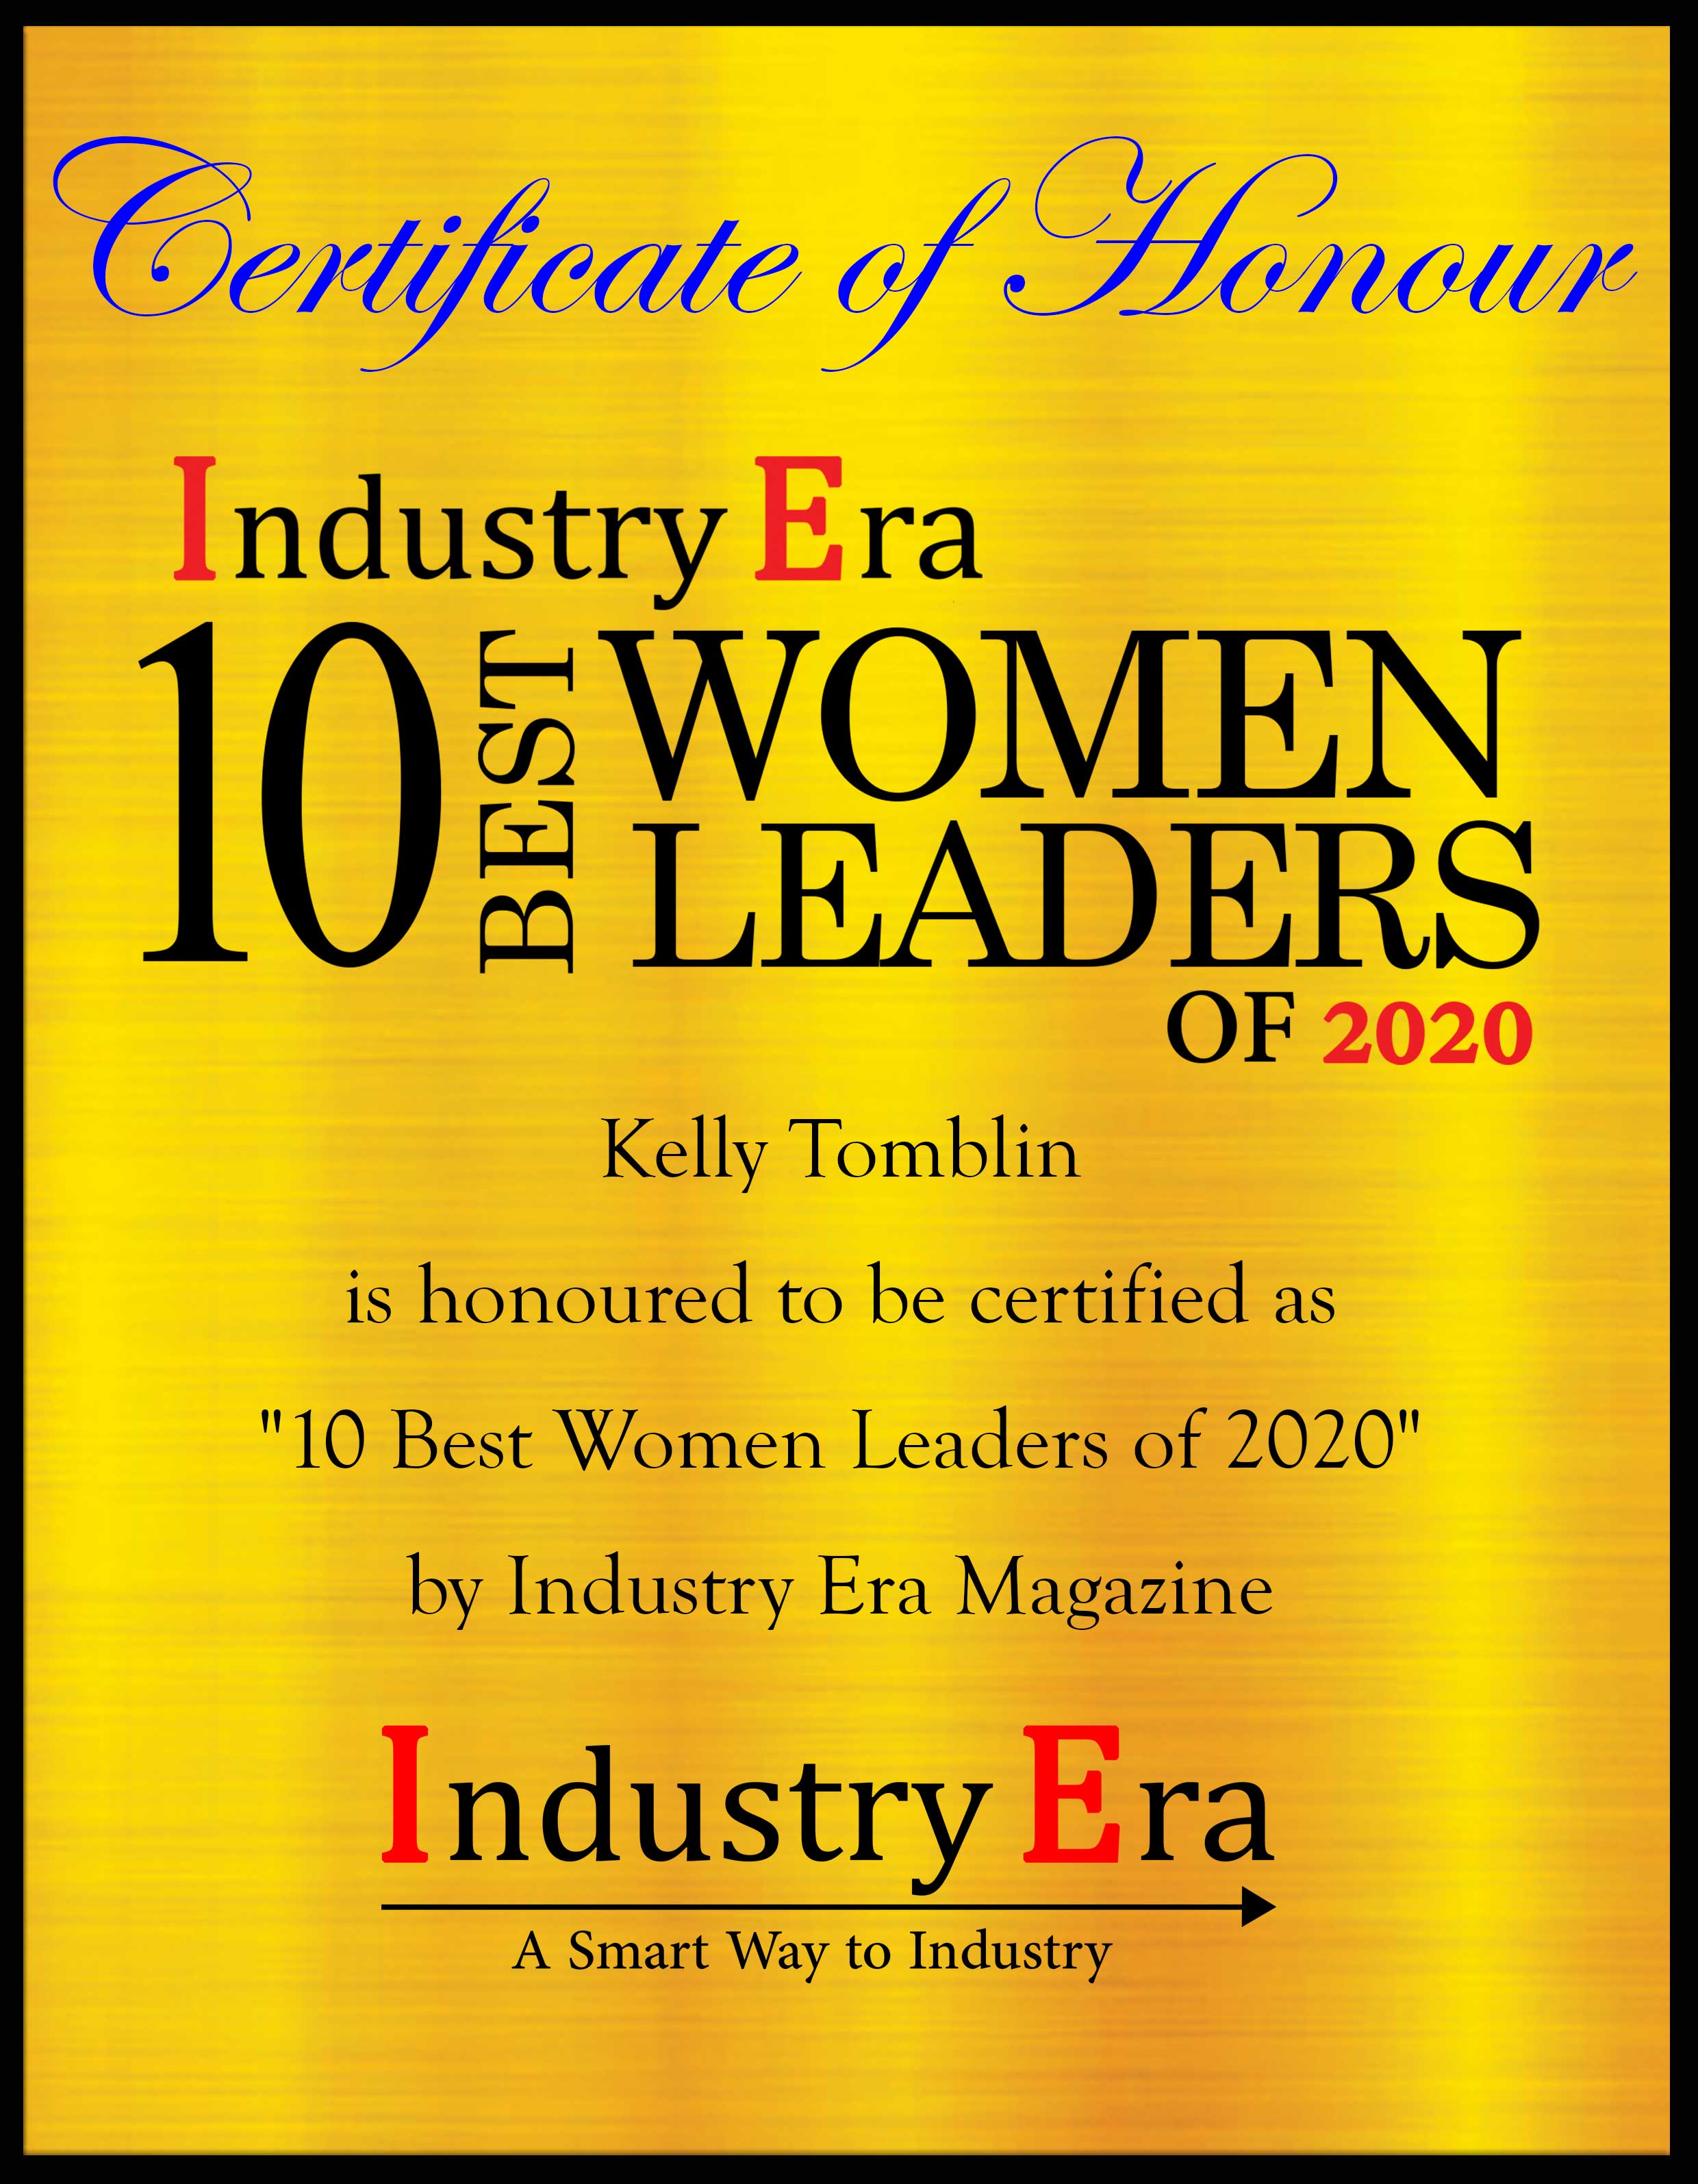 Kelly Tomblin, CEO of El Paso Electric Company Certificate